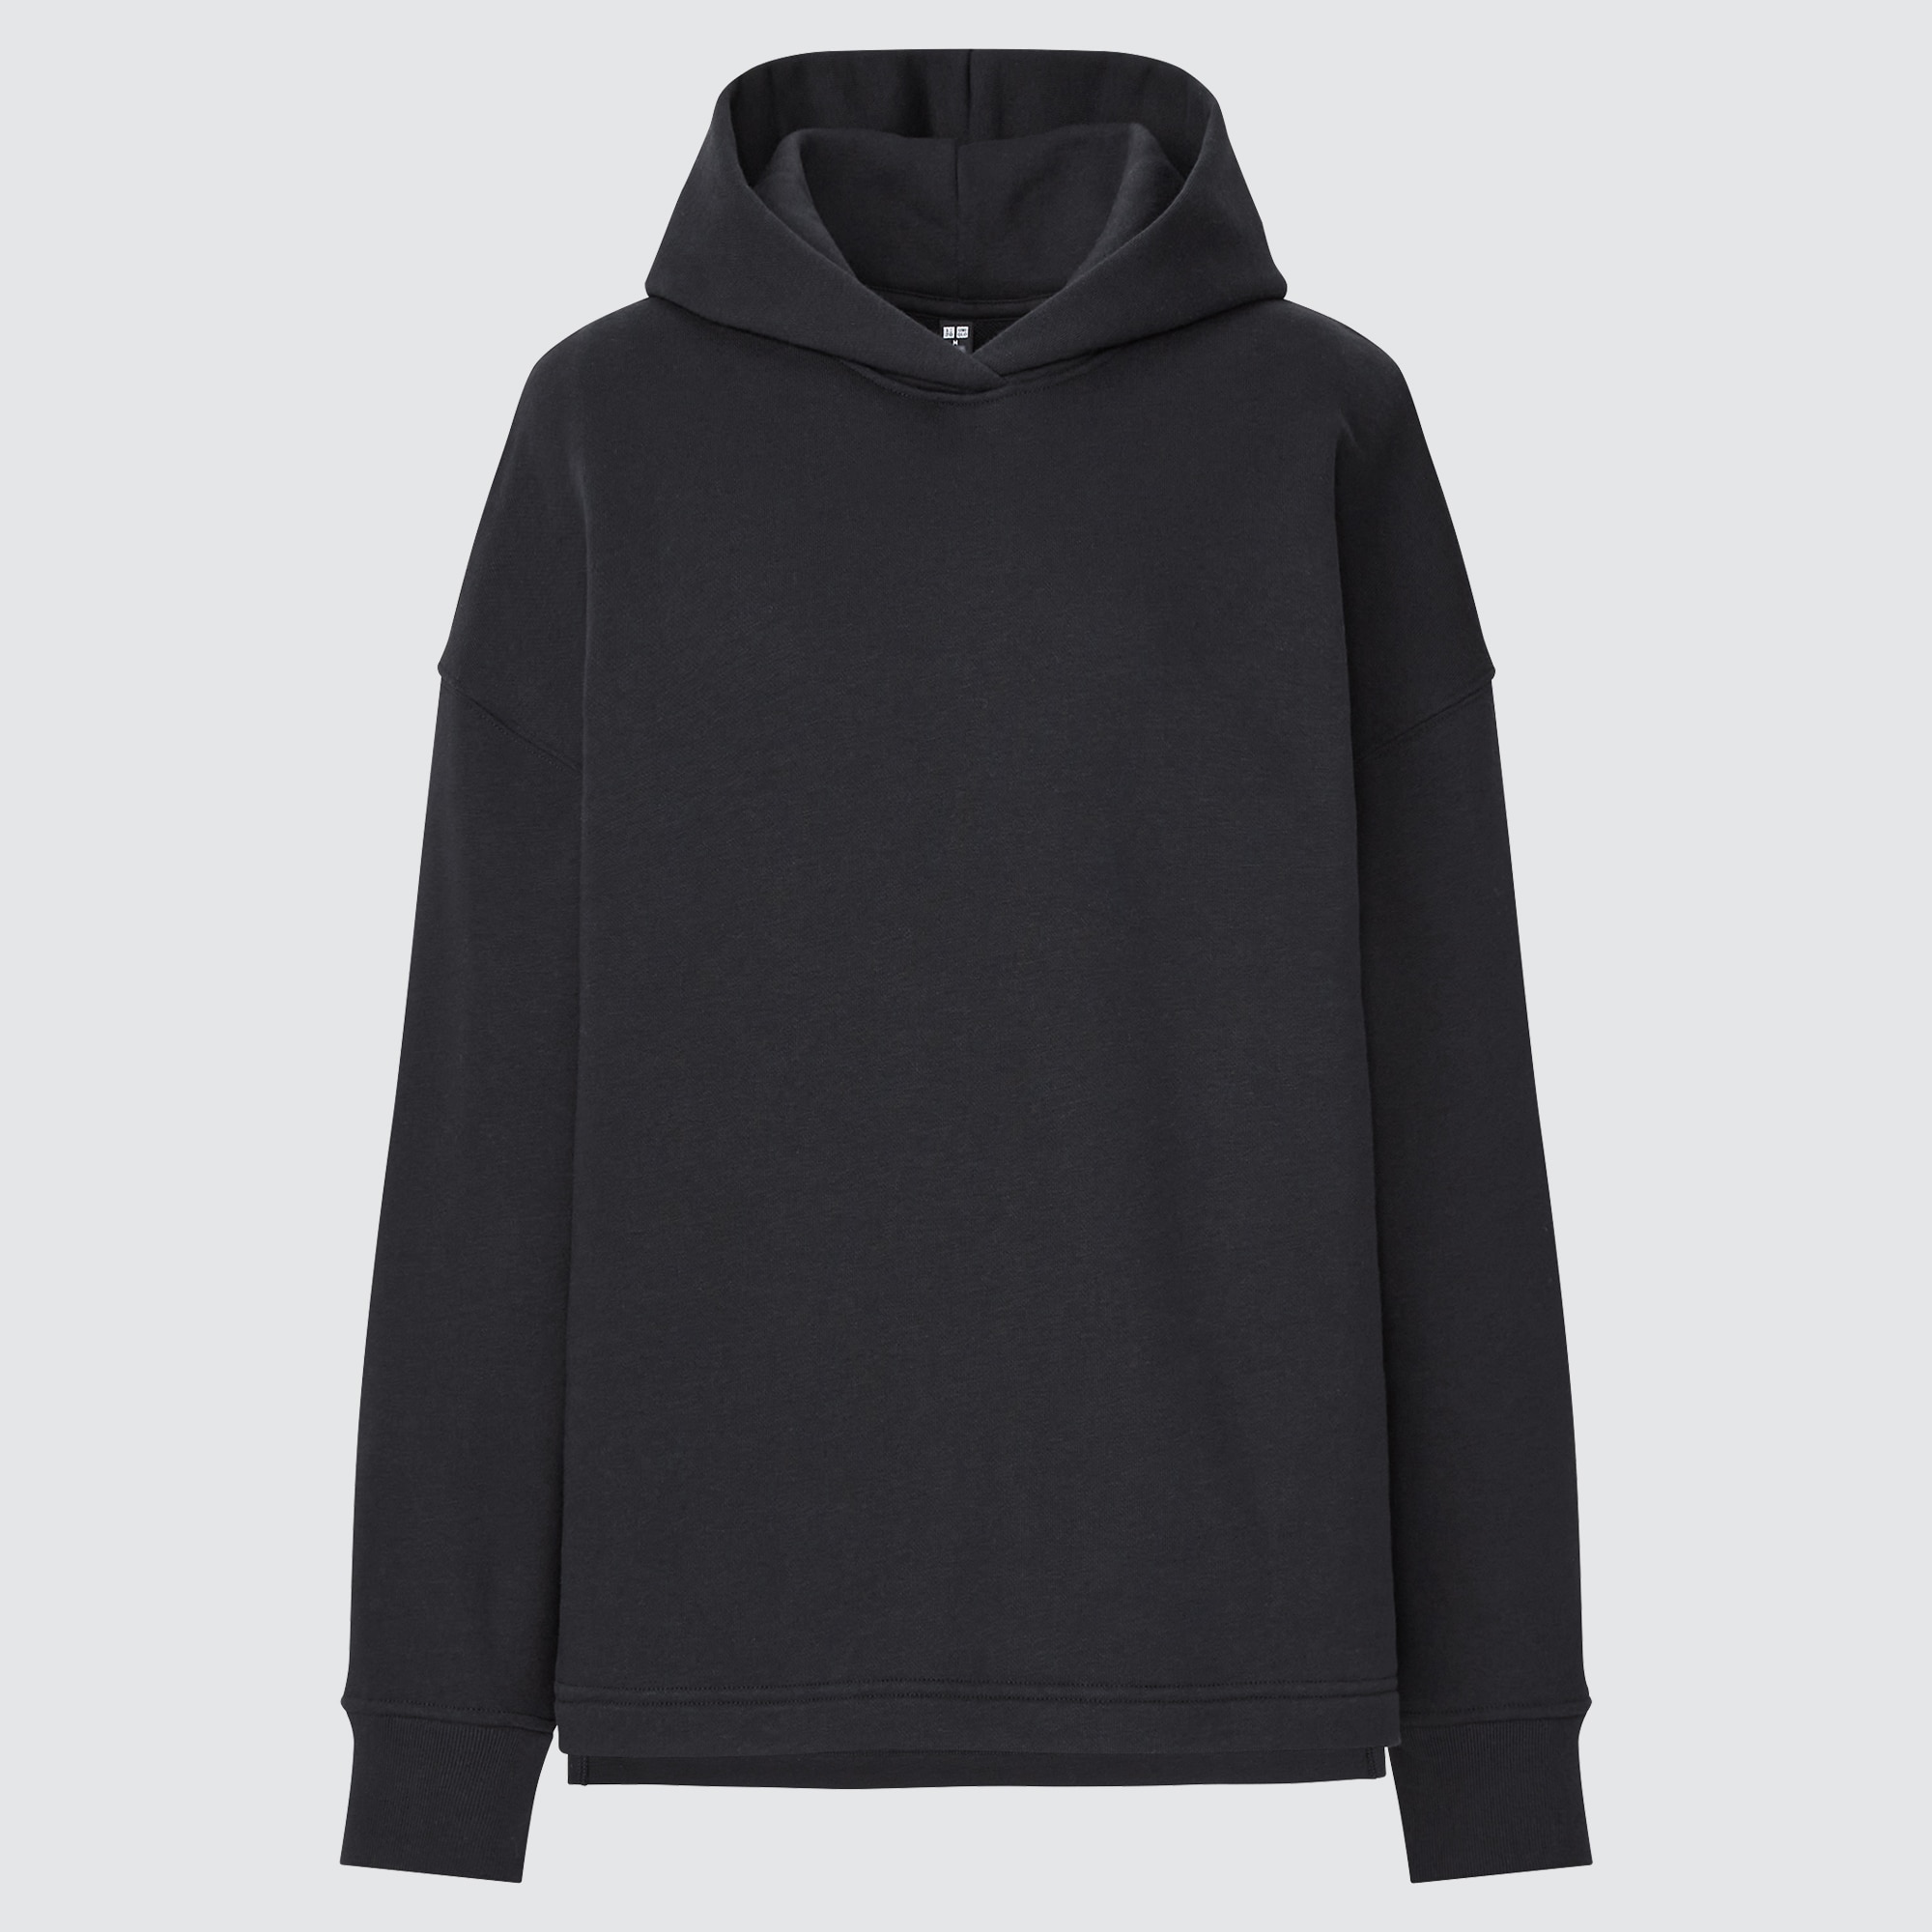 UNIQLO  Sweatshirts Hoodies  Sweatpants  MEN  Online store